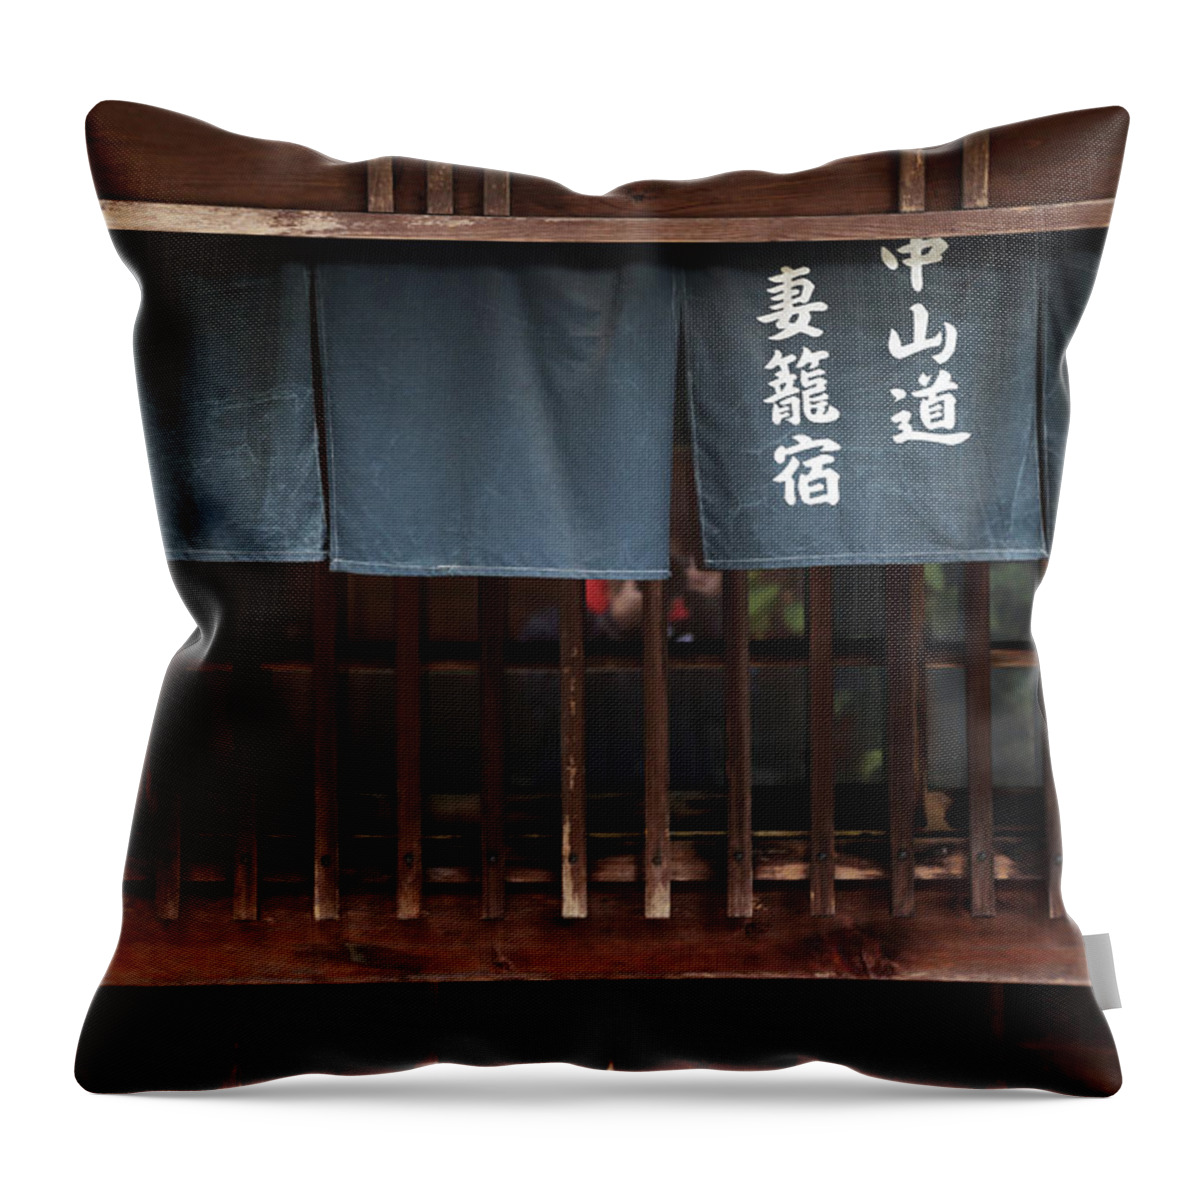 Post Town Throw Pillow featuring the photograph Tumago juku by Kaoru Shimada